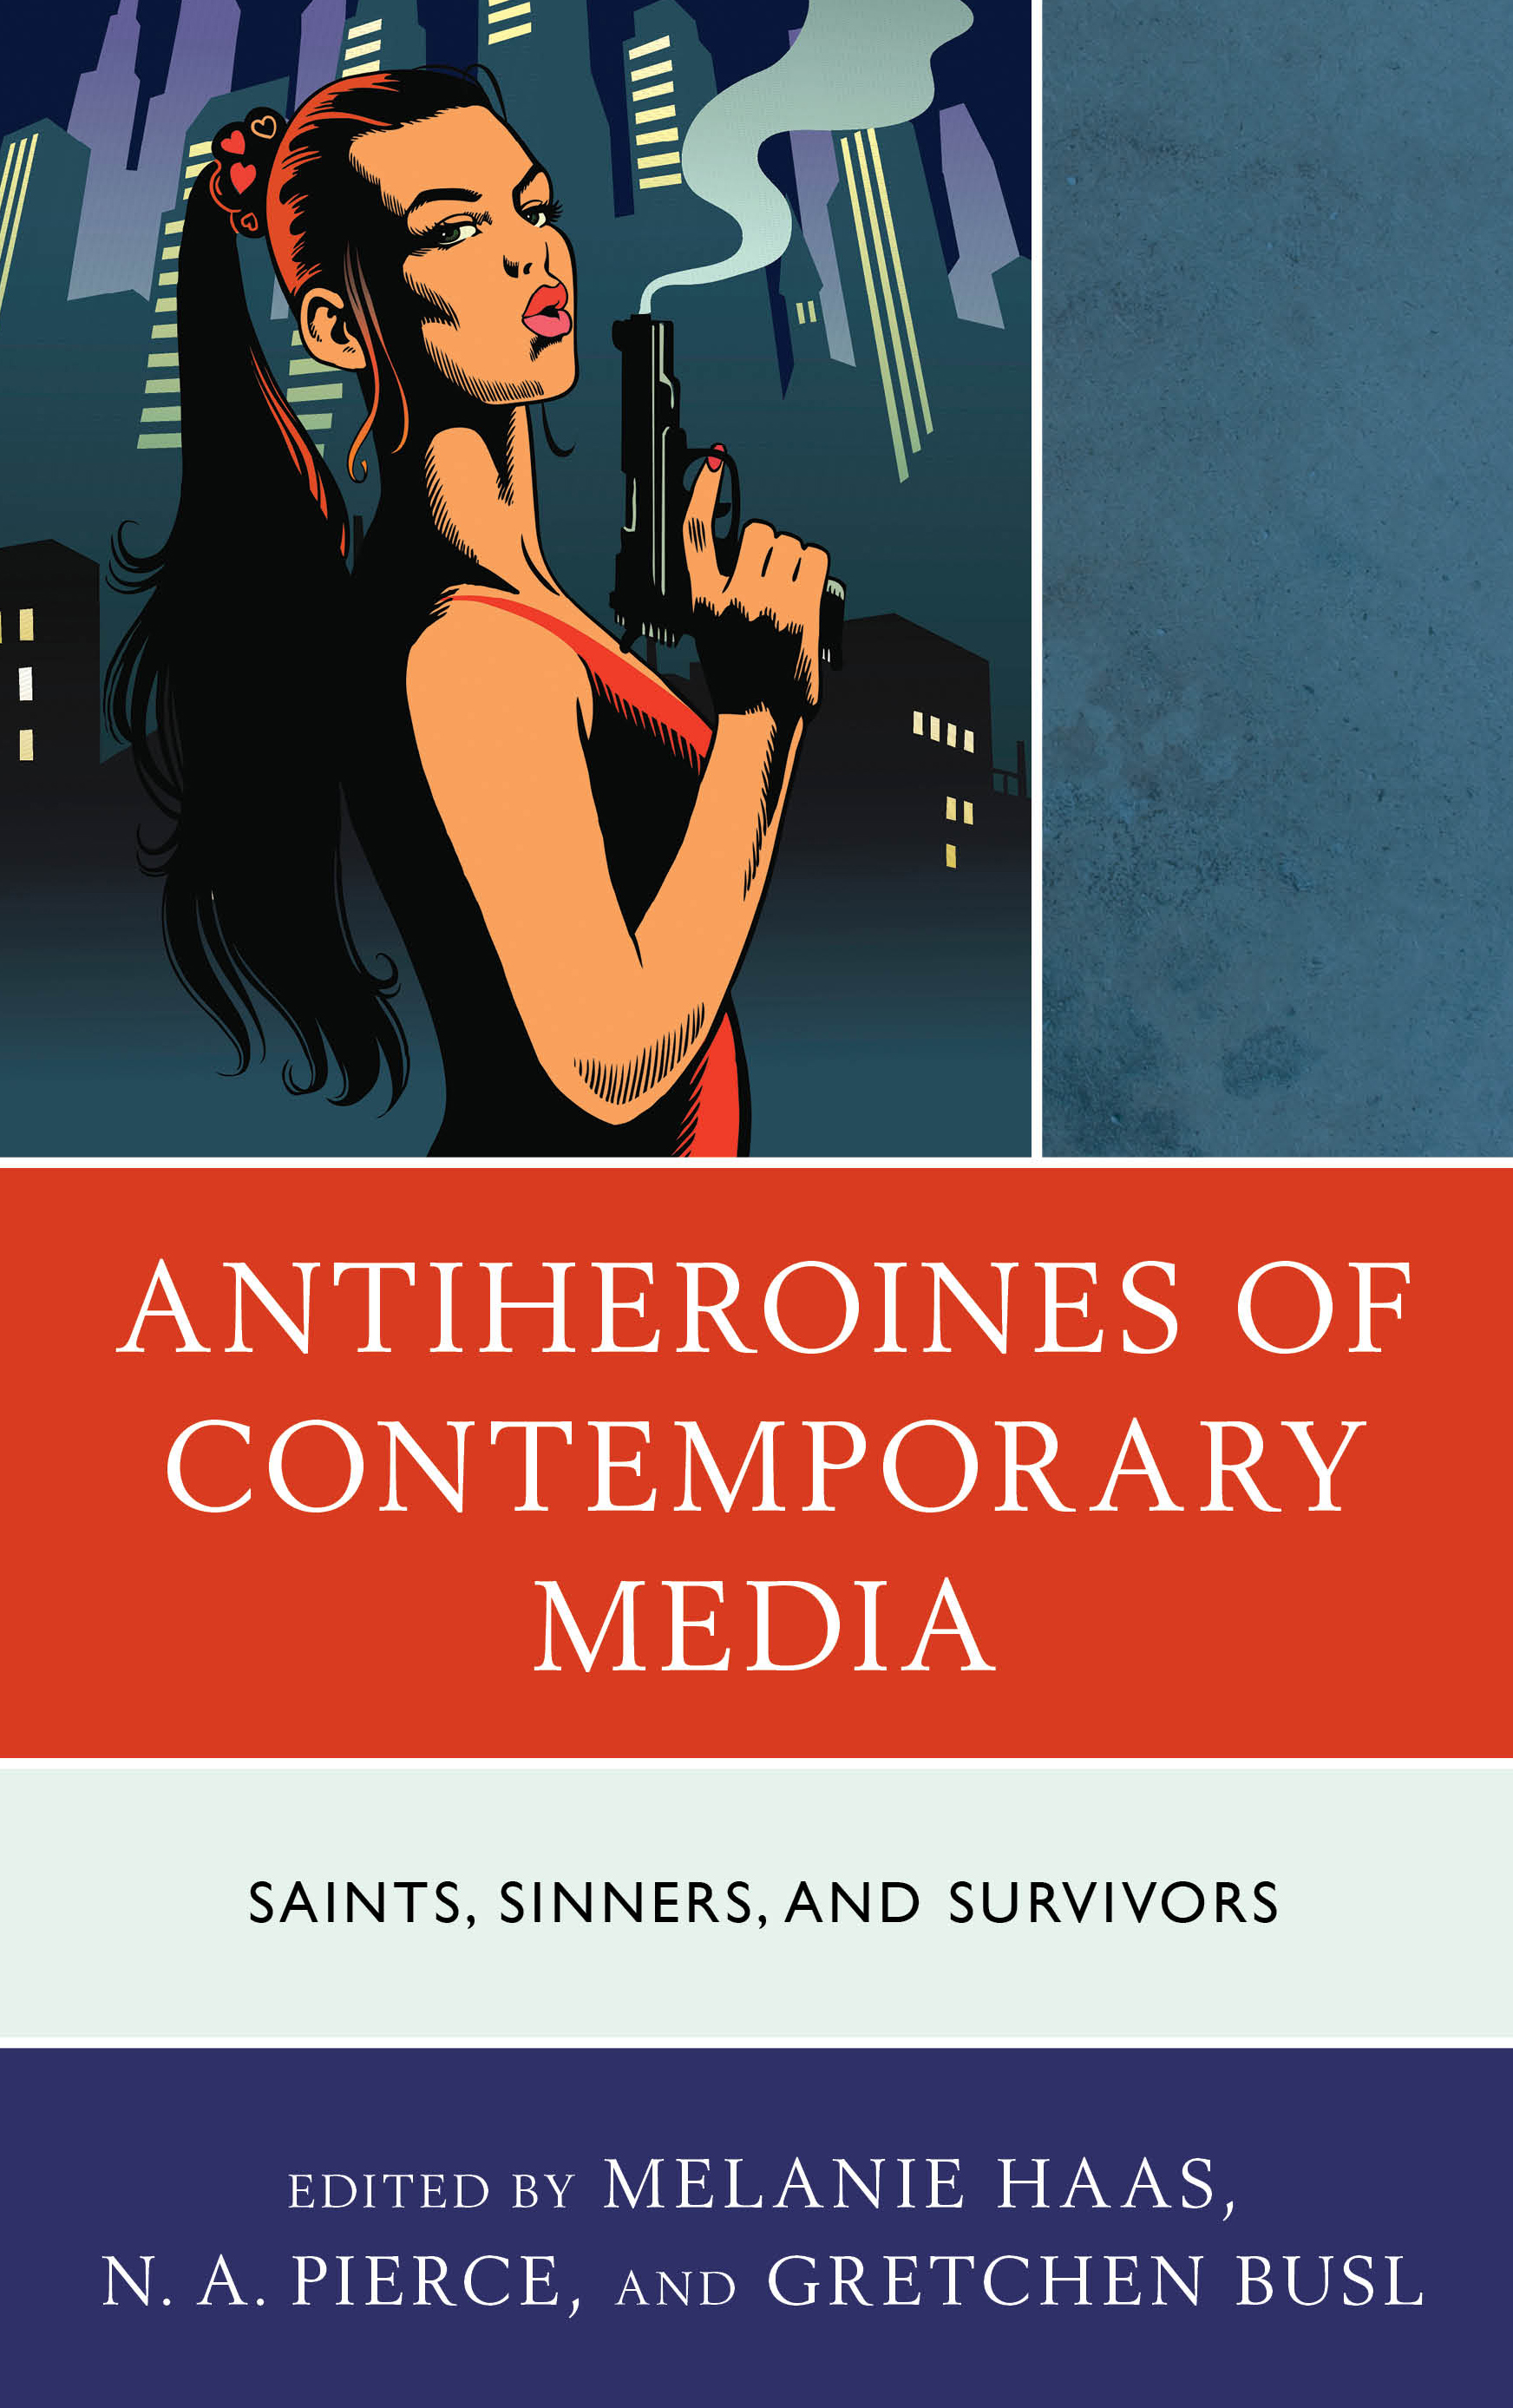 Antiheroines of Contemporary Media: Saints, Sinners, and Survivors